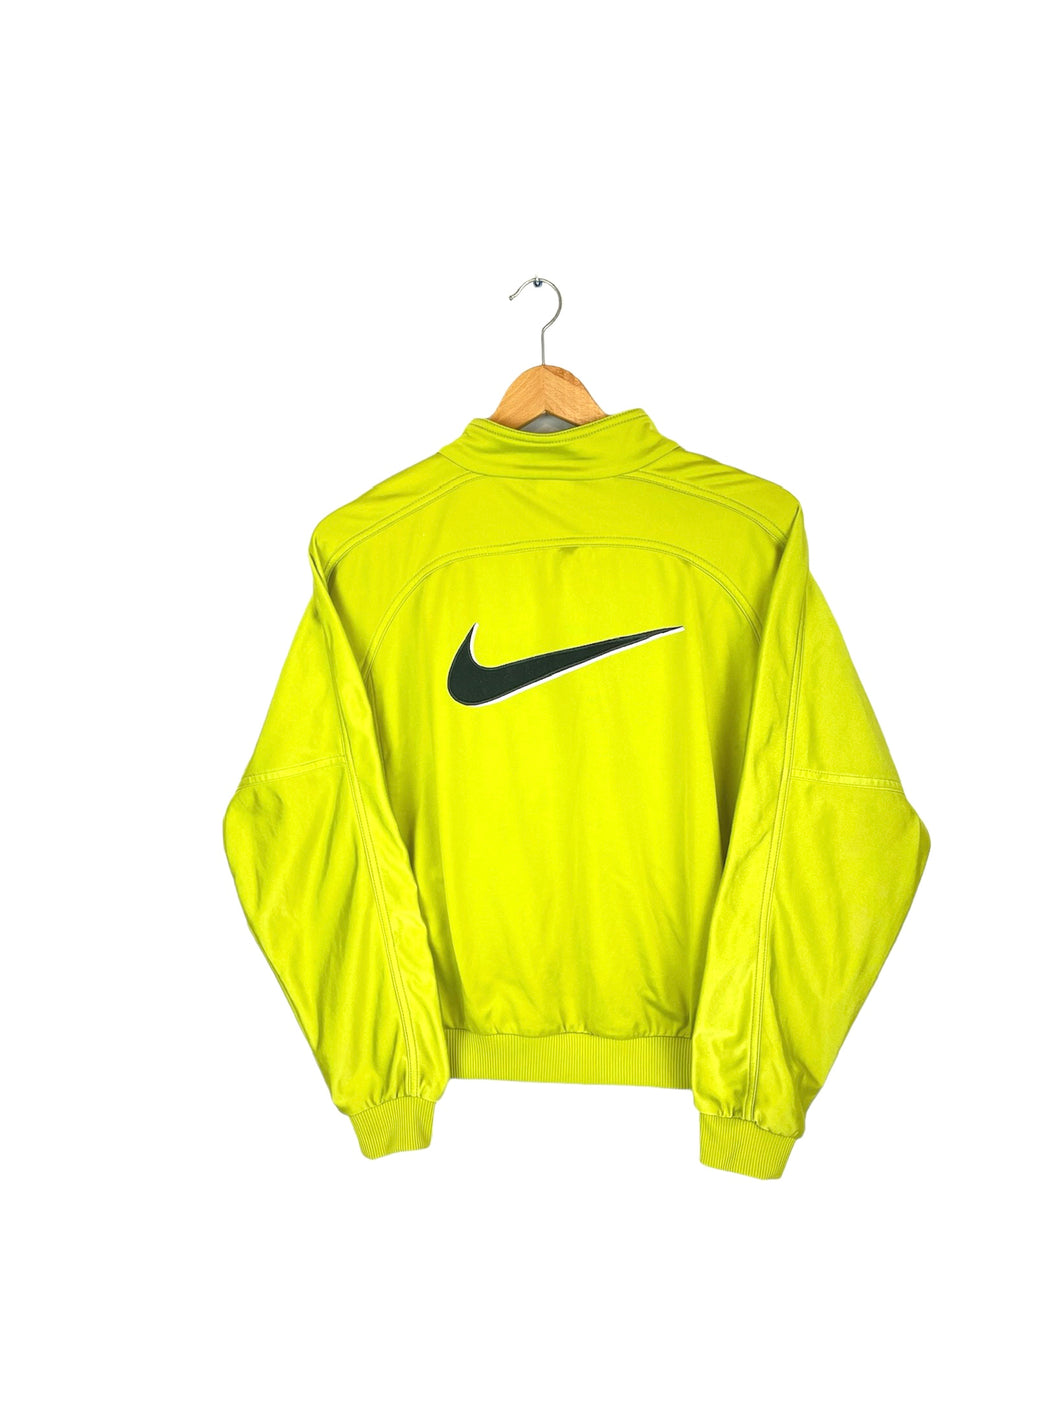 Nike Jacket - Small